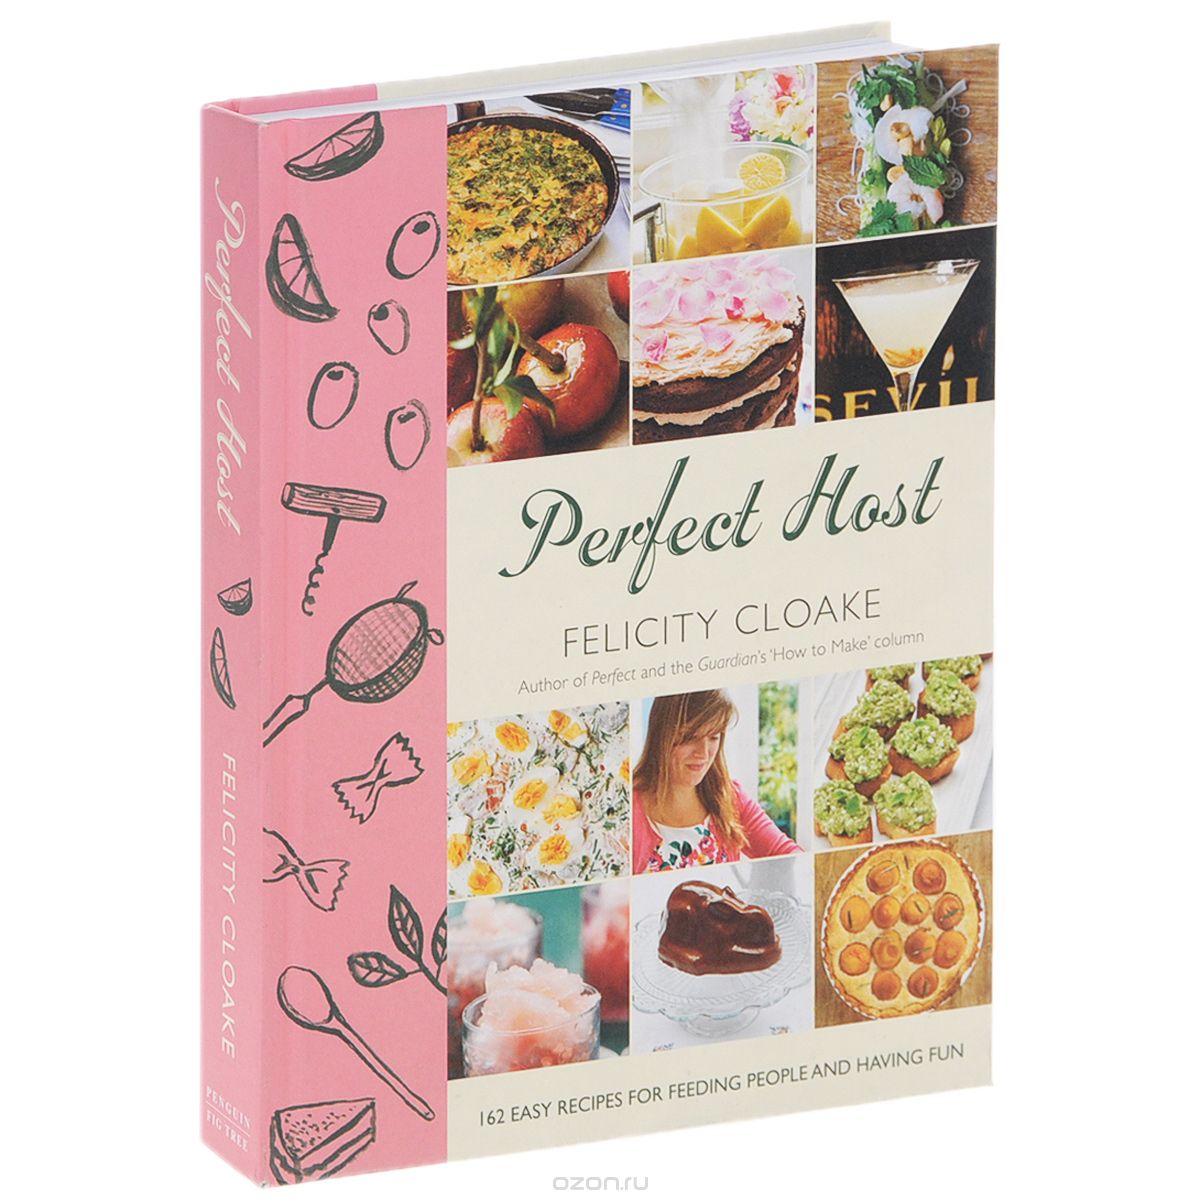 Скачать книгу "Perfect Host: 162 Recipes for Feeding People and Having Fun"